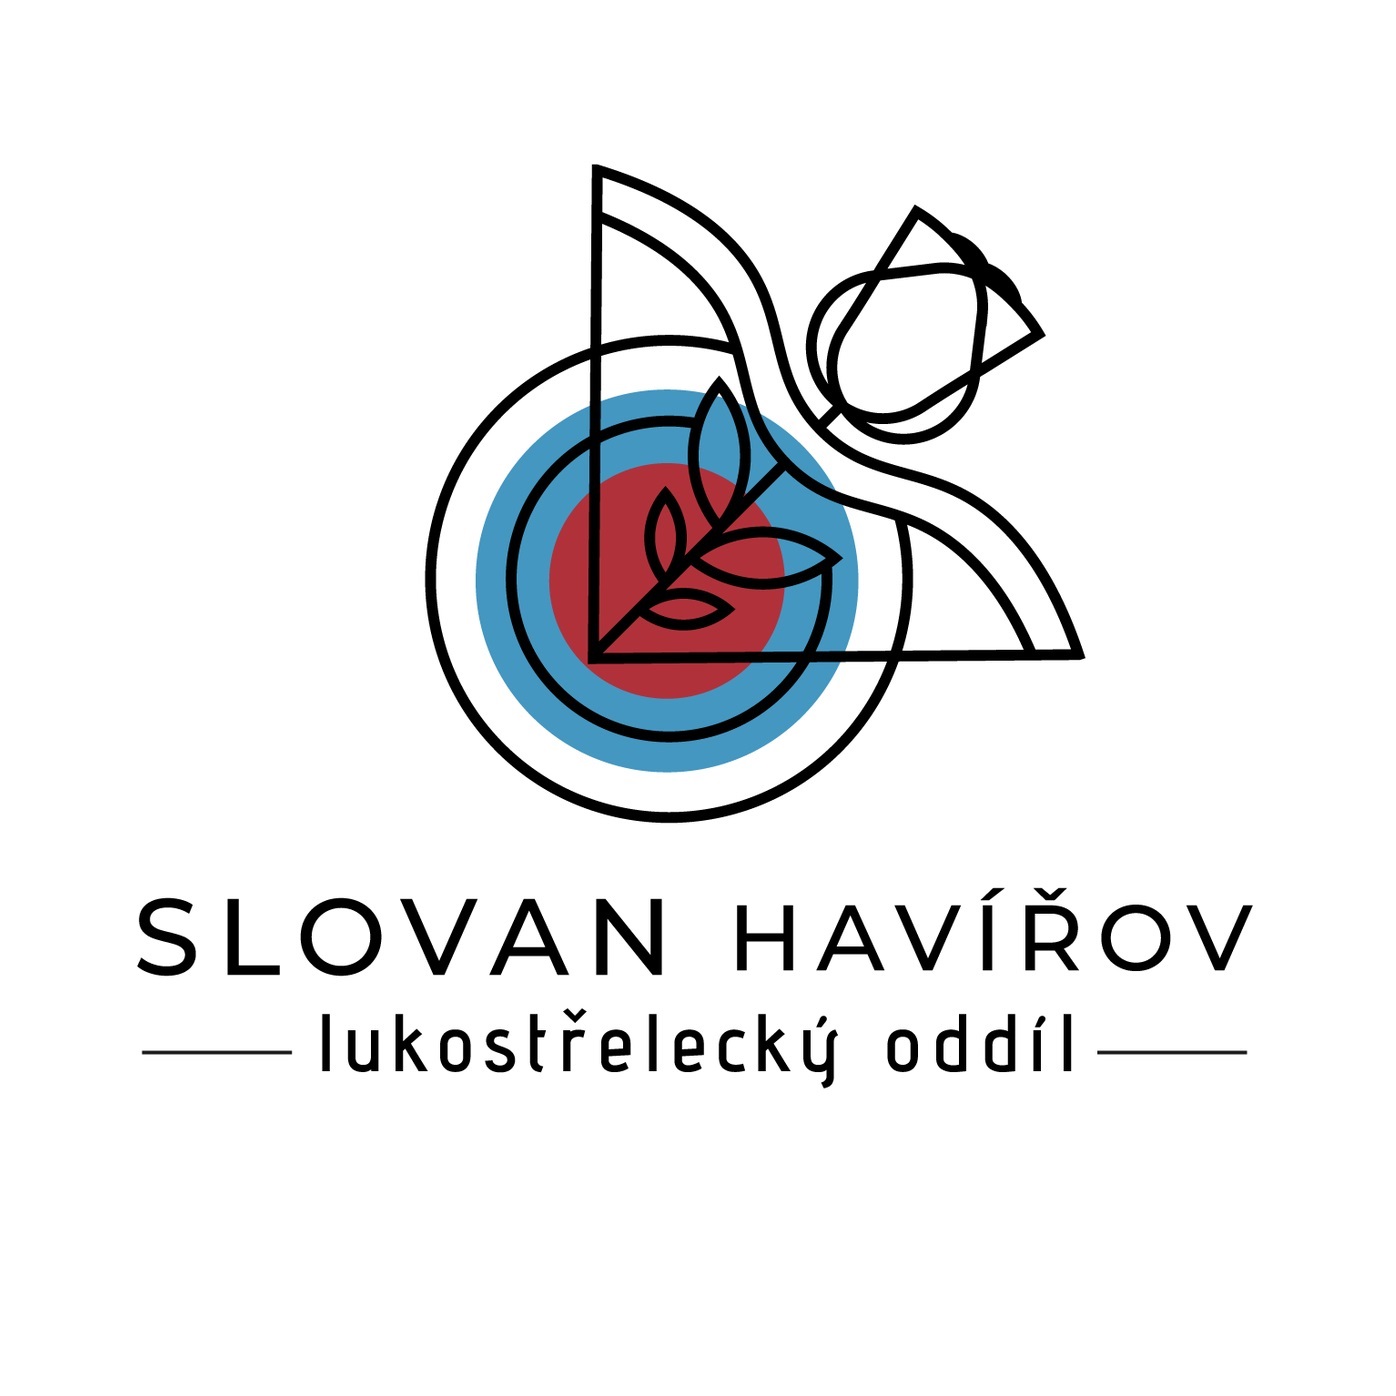 LO TJ Slovan Havířov